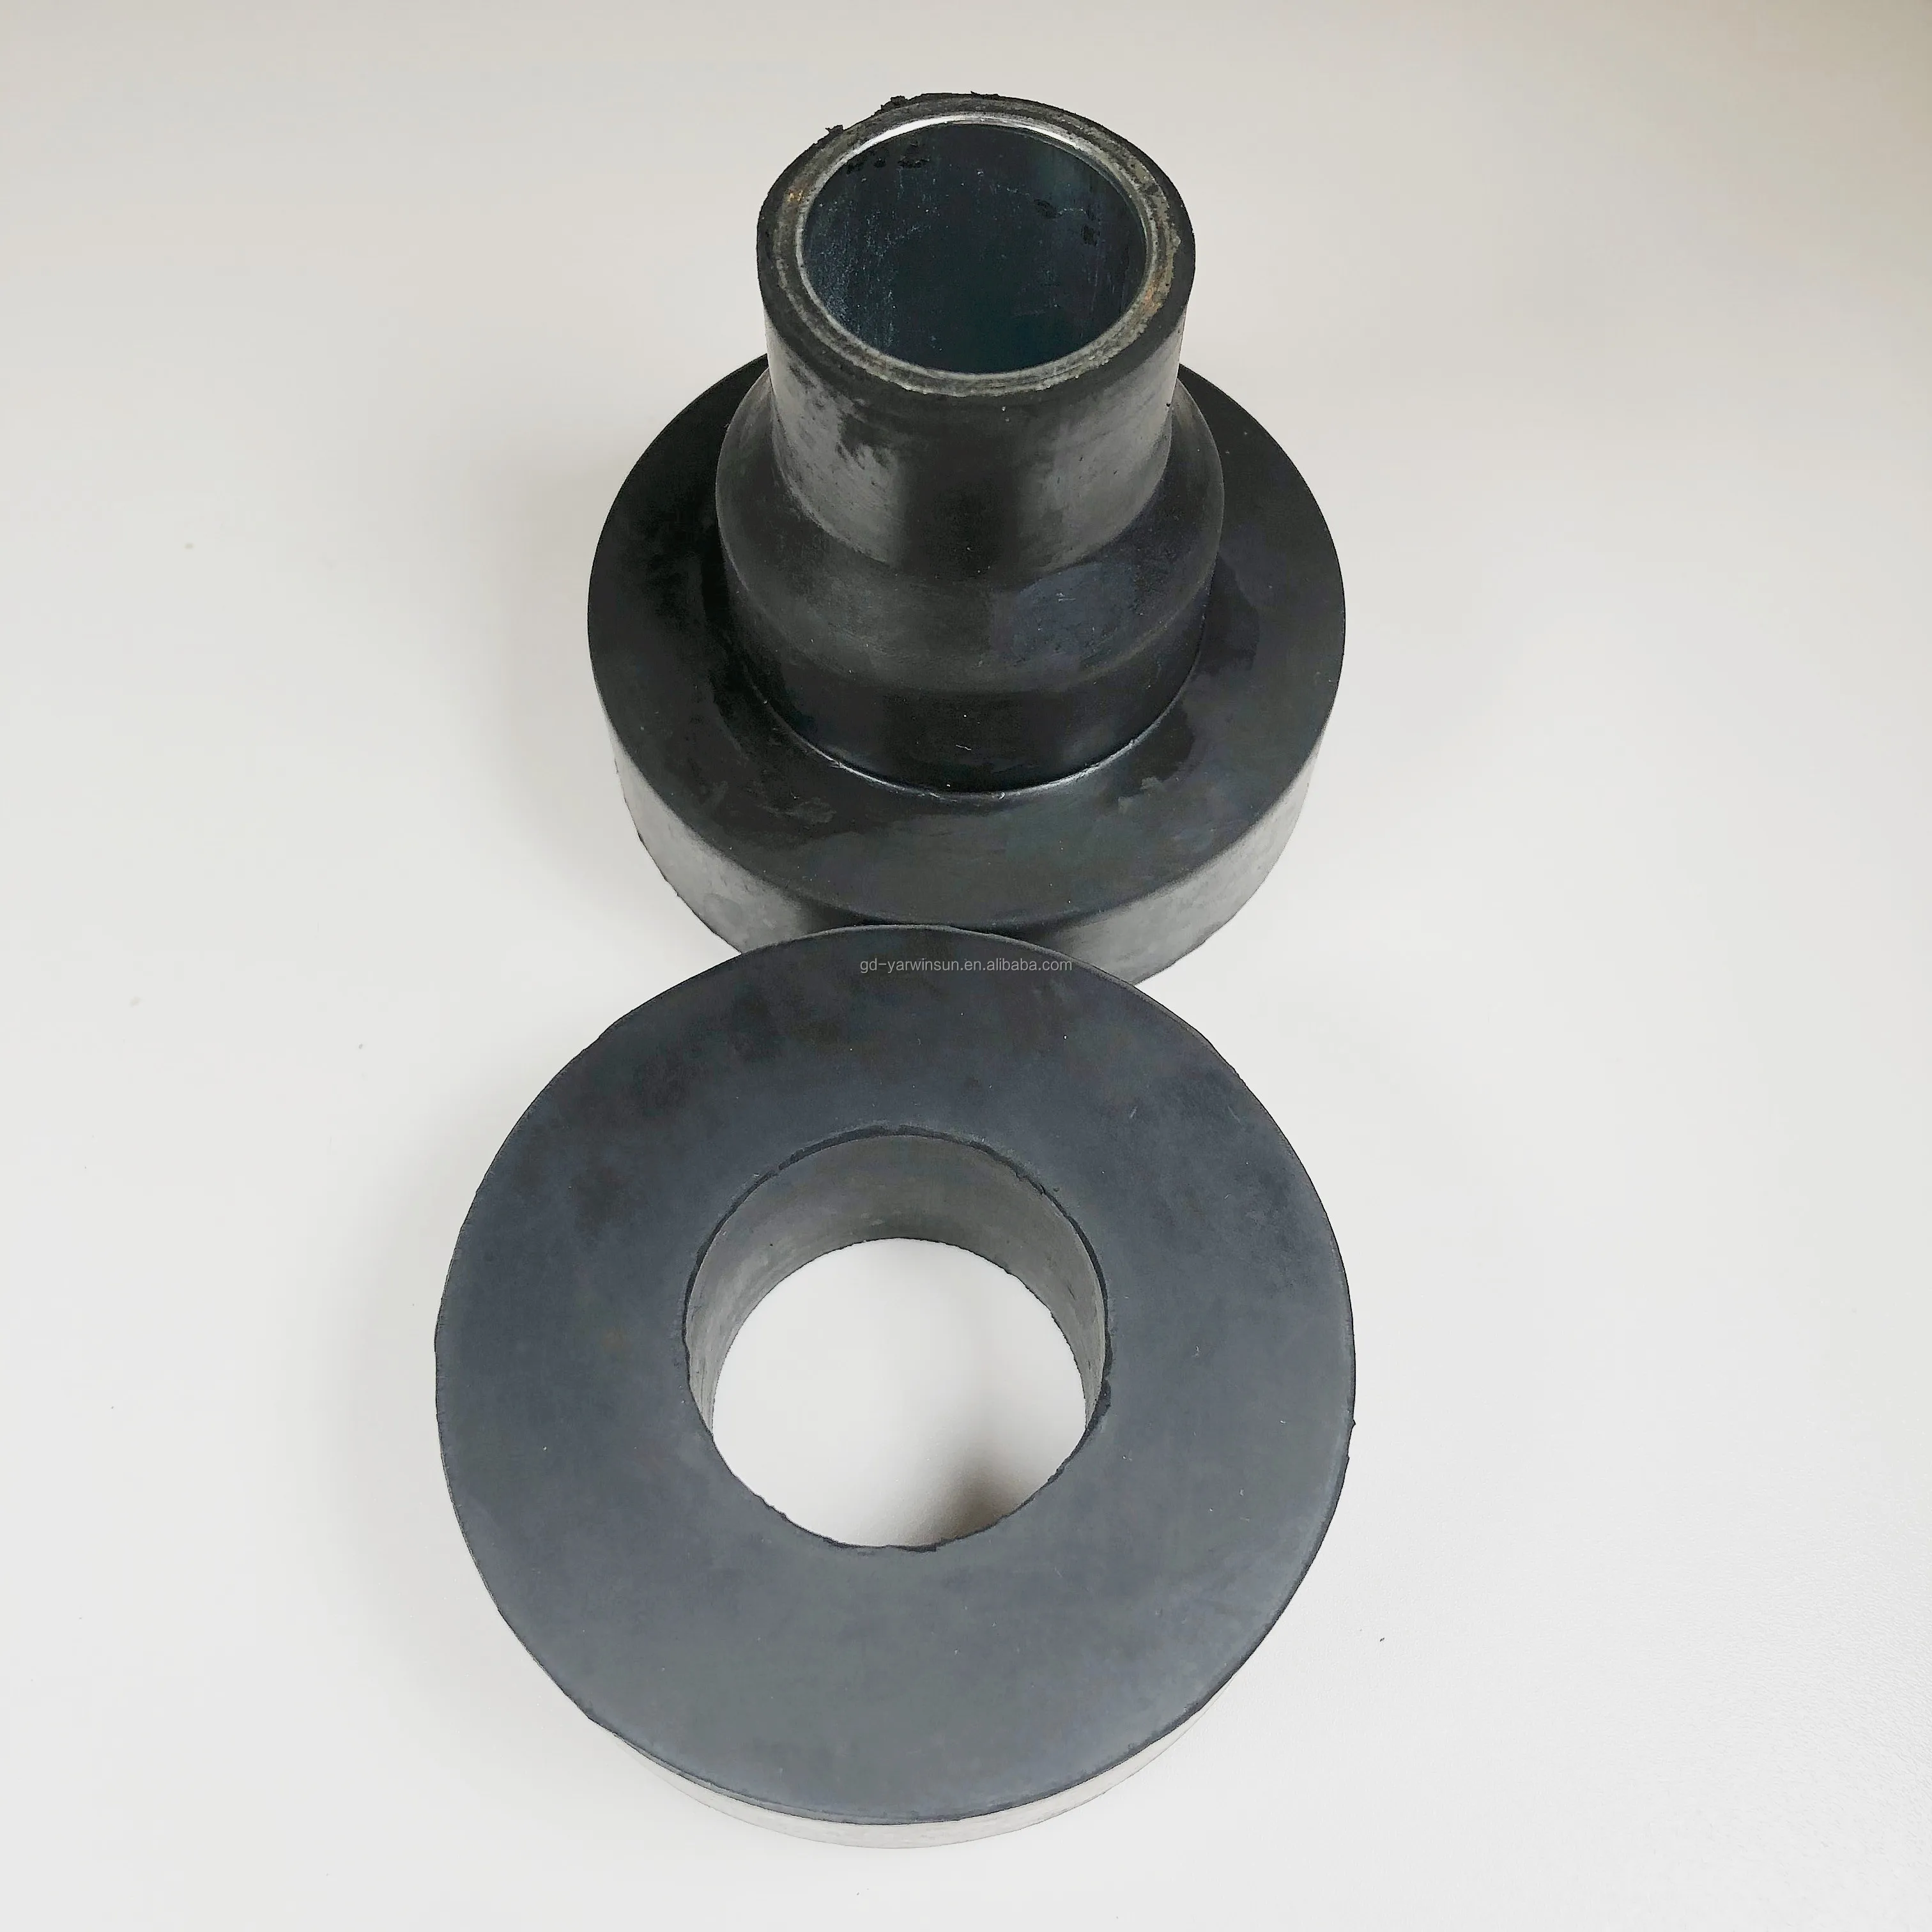 small rubber bumper natural rubber vibration rubber mount